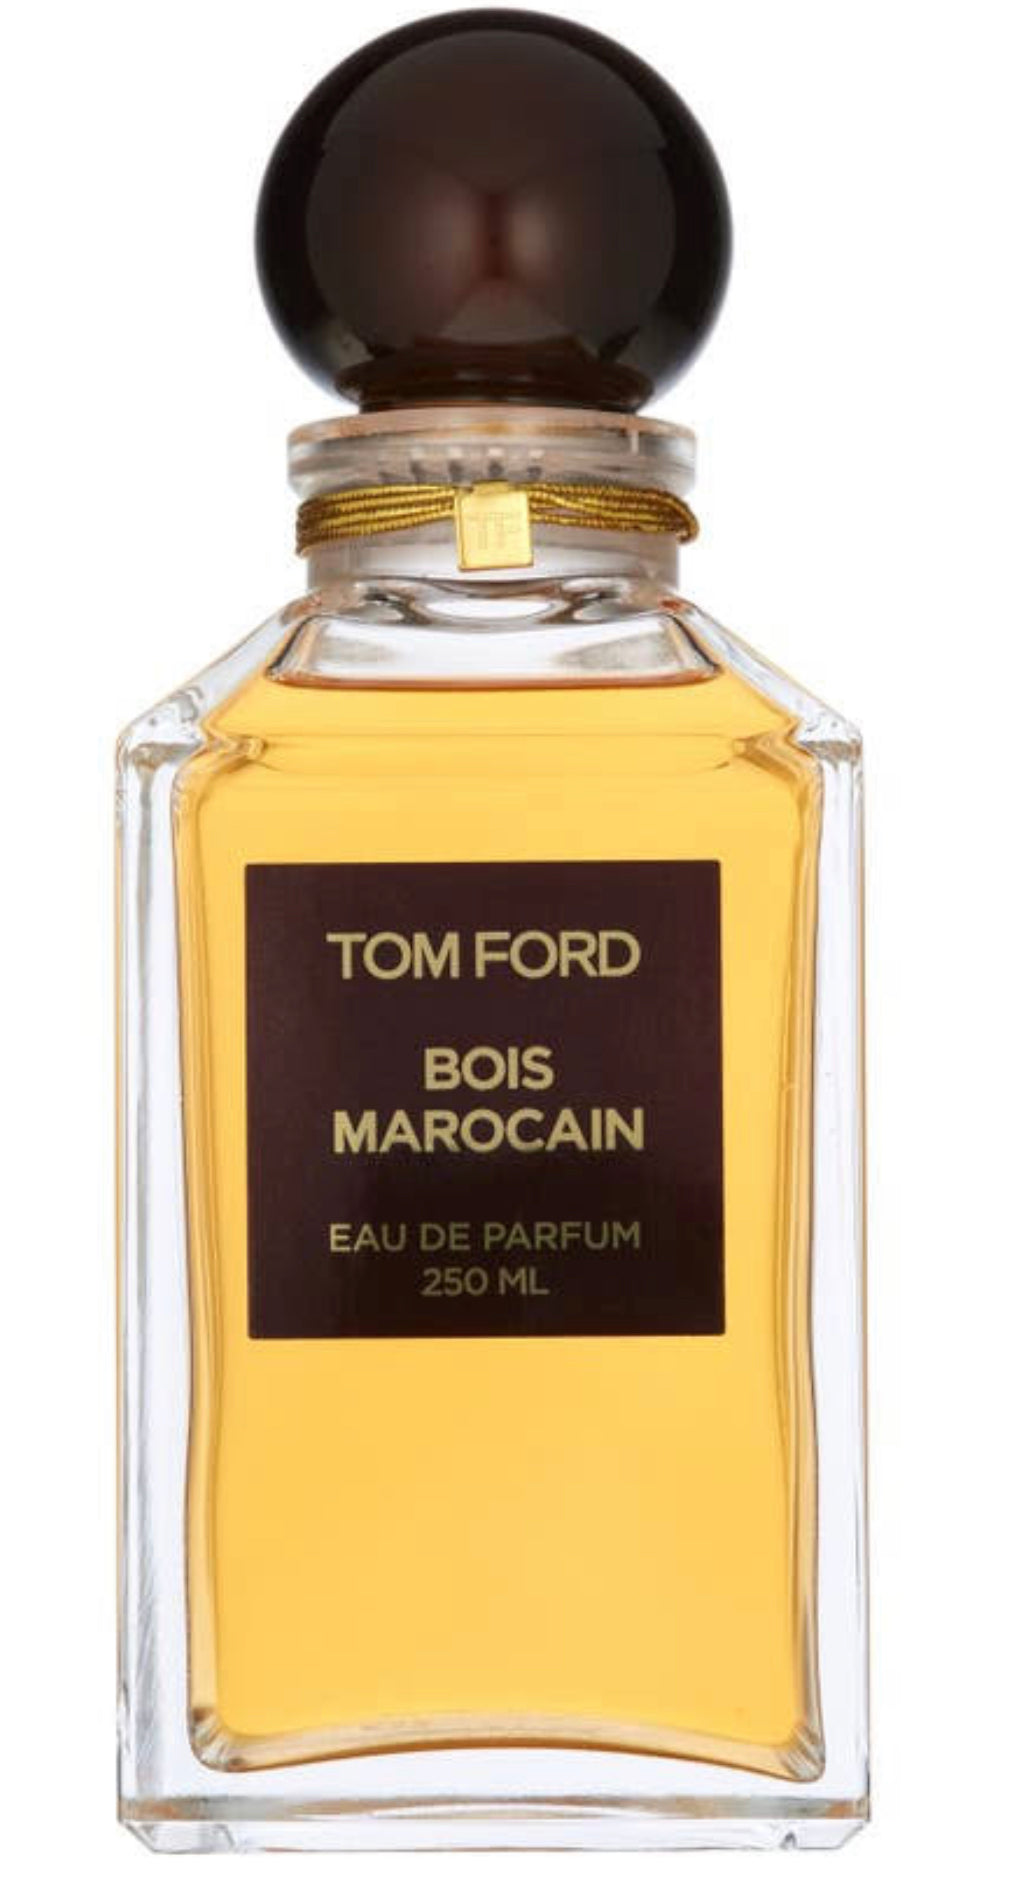 Tom Ford Bois Morocain Eau De Parfum Samples